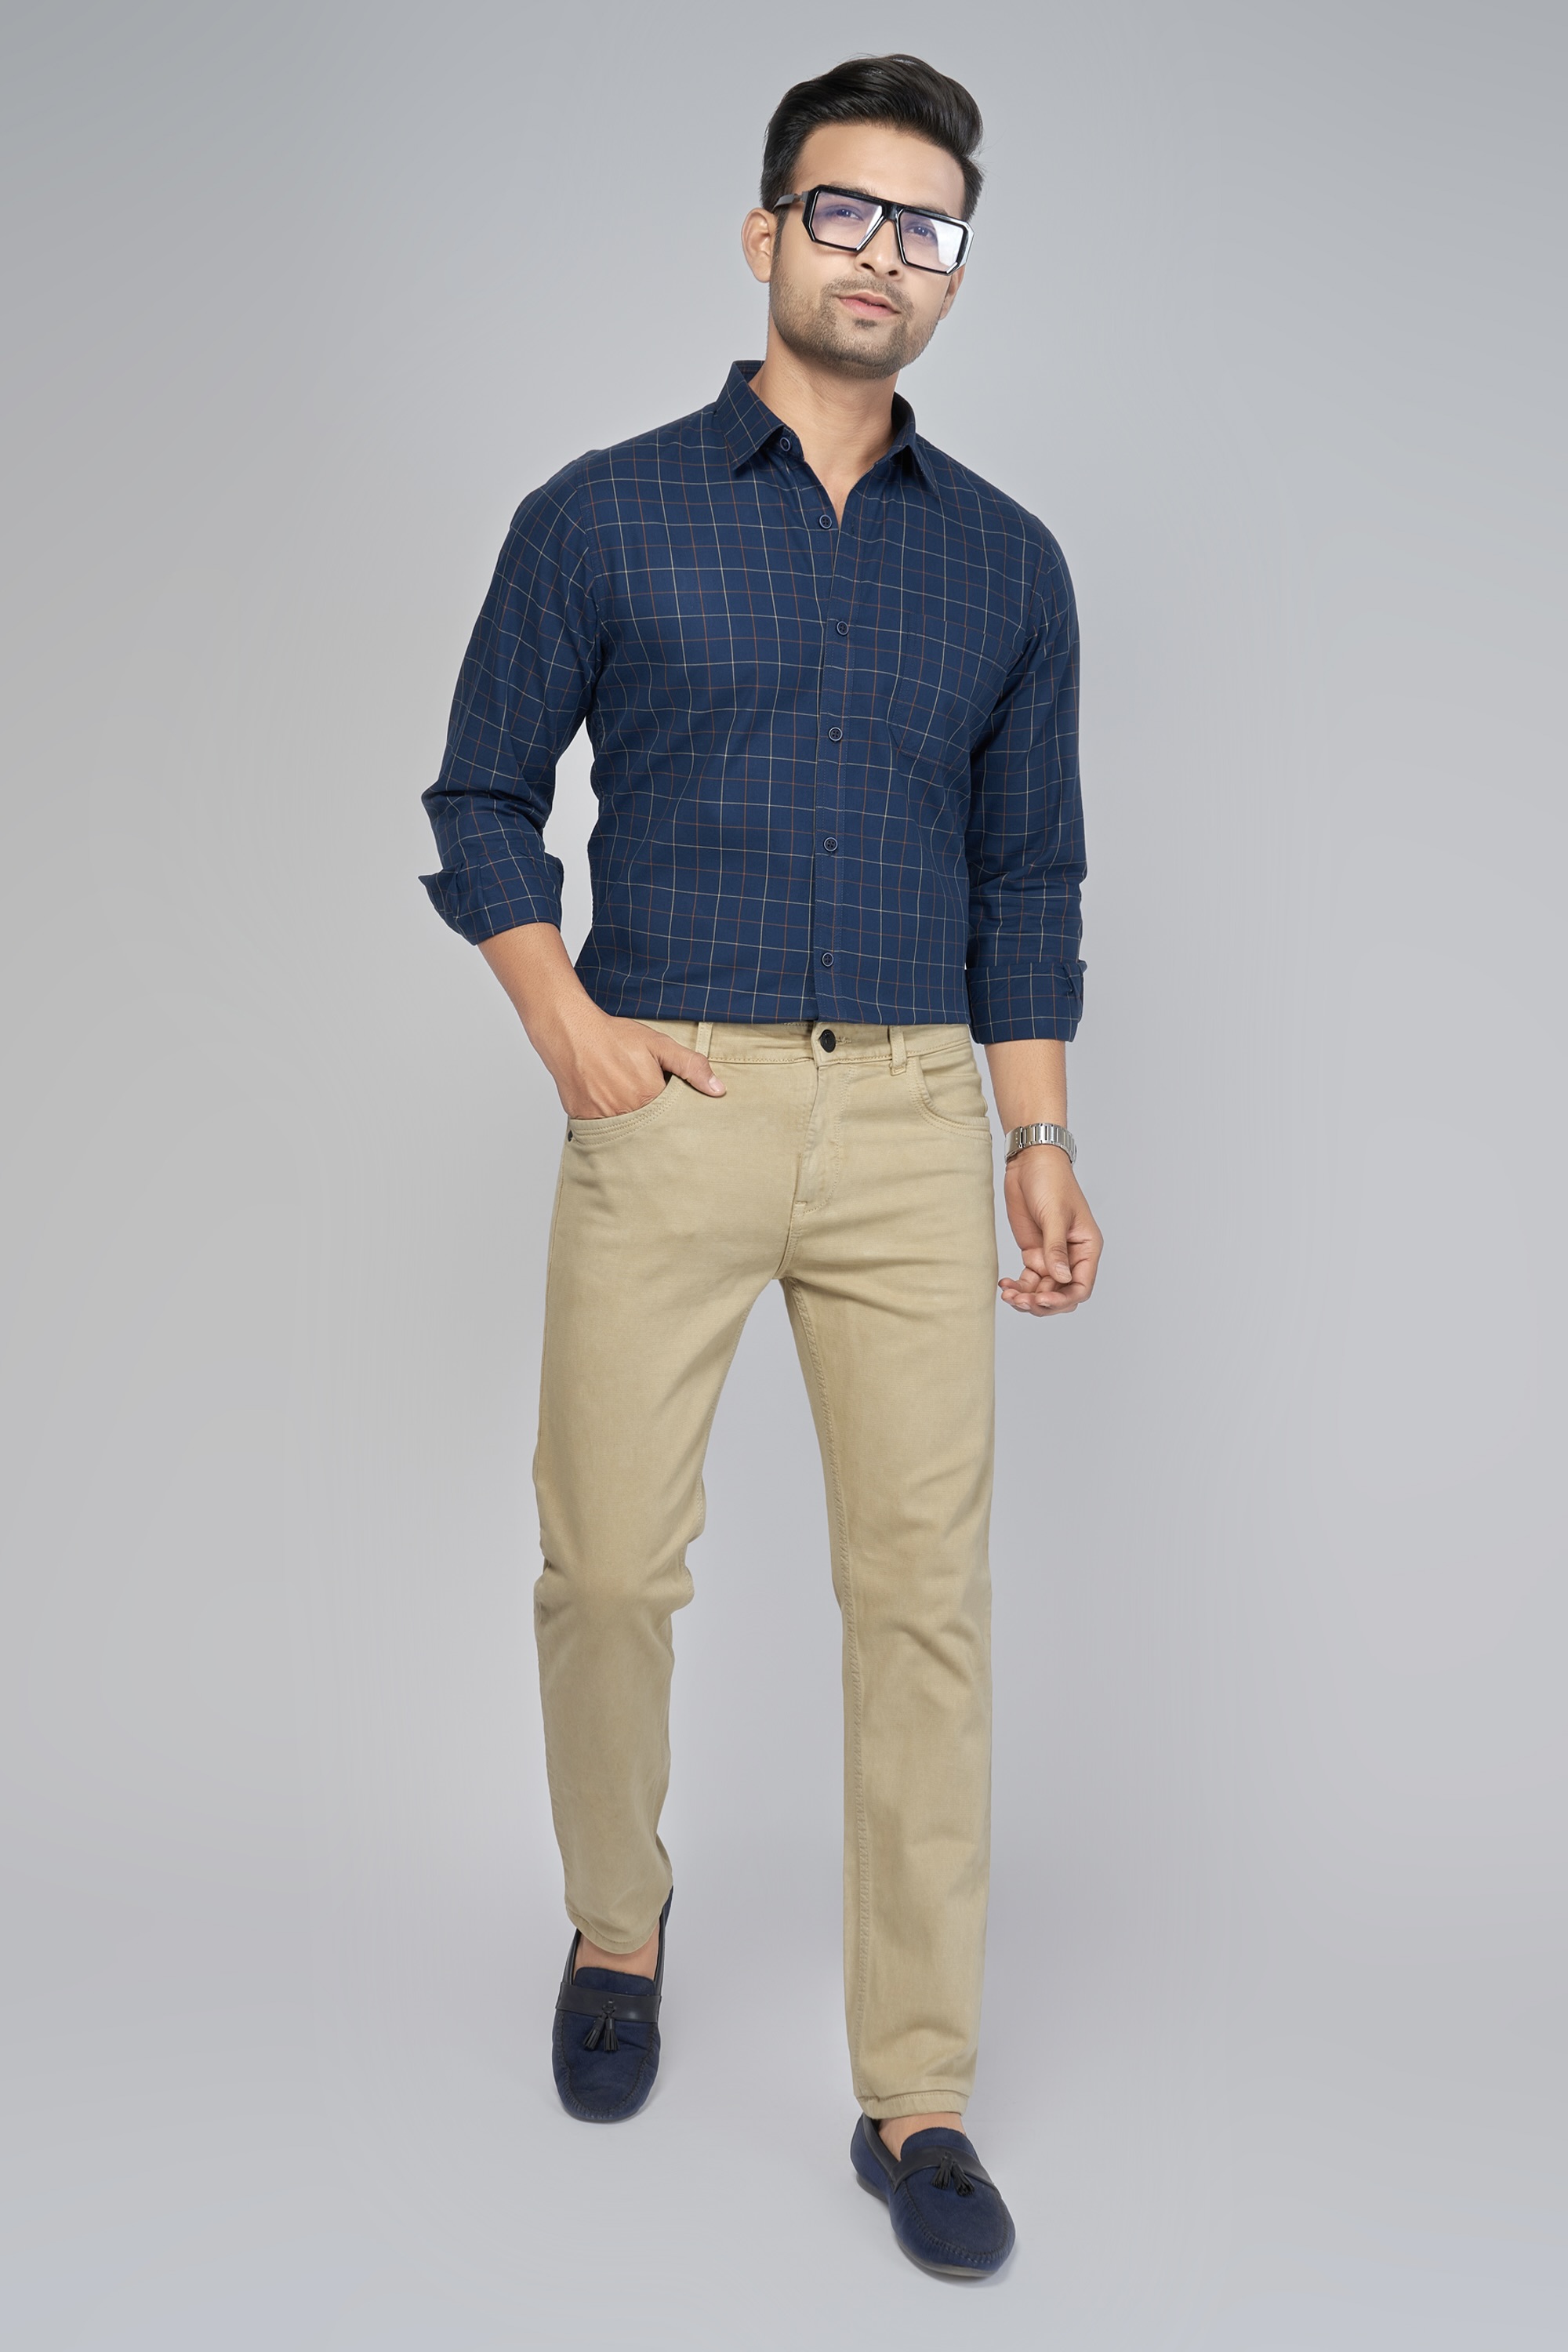 Men's Blue Check Casual Shirt